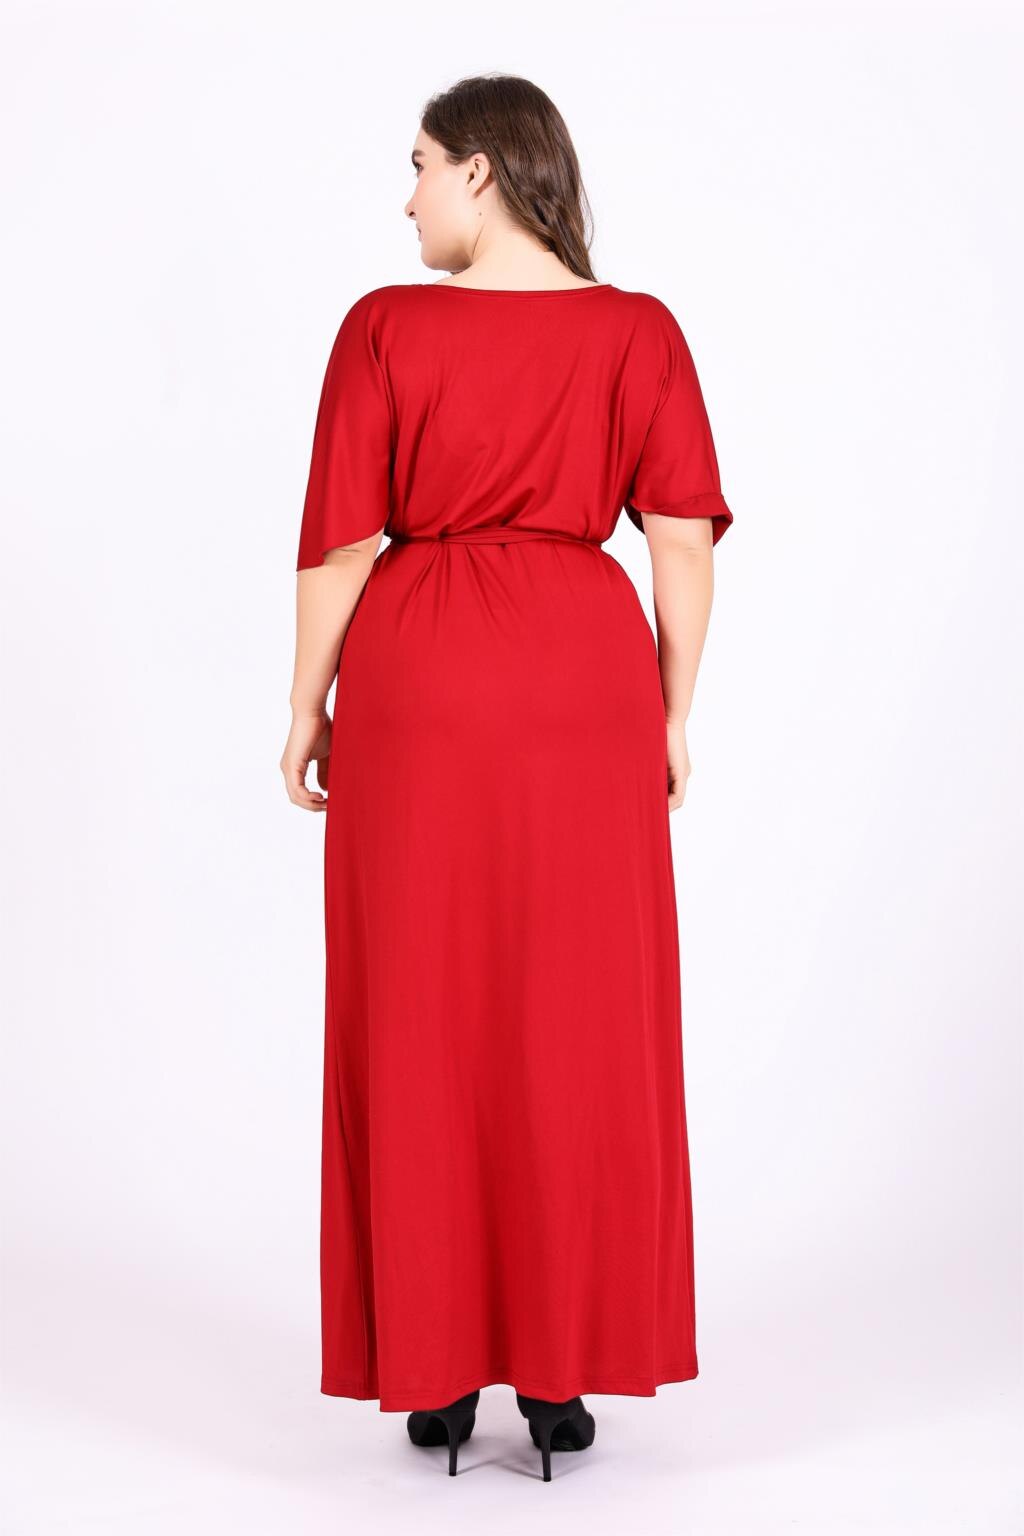 Red Party Dresses For Fat Women Summer Deep V Neck Ruffles Short Sleeve Sexy Long Dress 4xl 5xl 6xl Plus Size Women Clothing